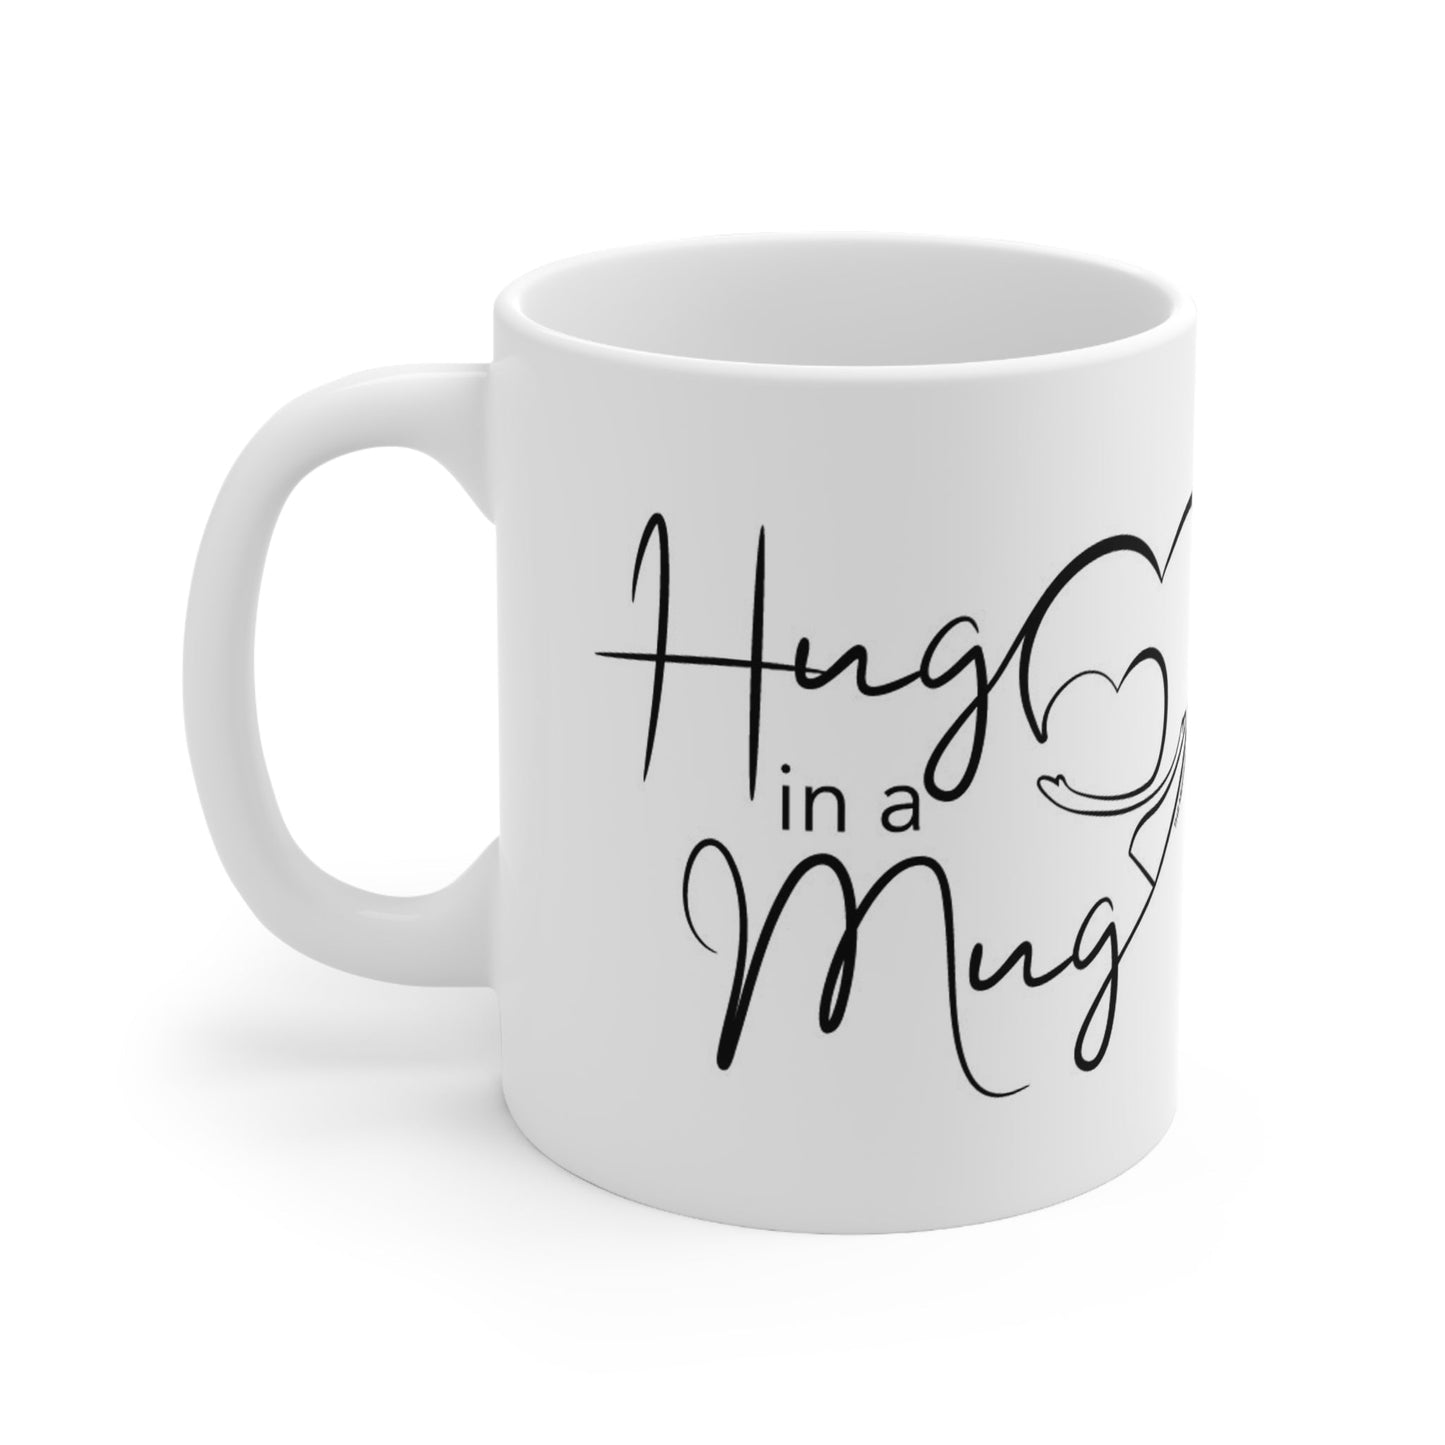 Hug in a Mug - Ceramic Mug 11oz Mug - The Meeting Place on Market